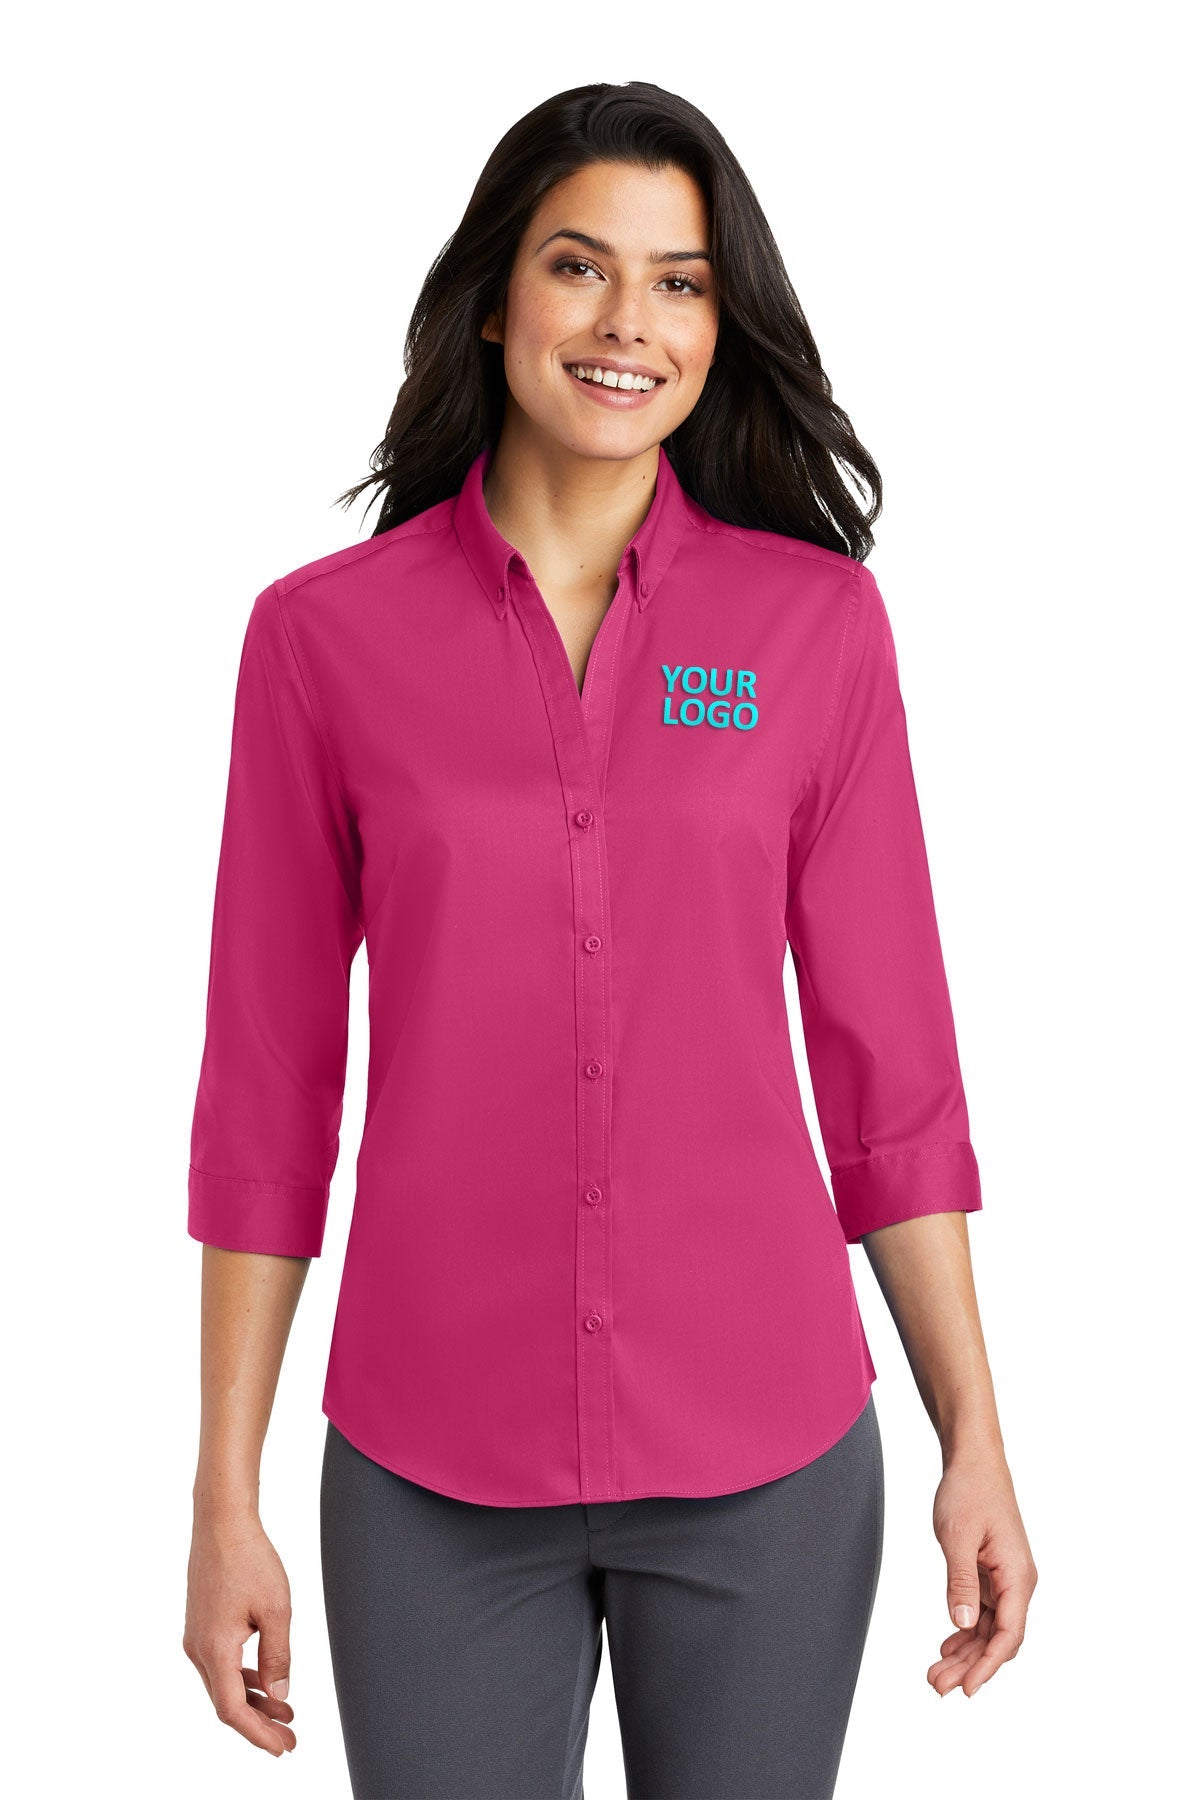 Port Authority Pink Azalea L665 work shirts with logo